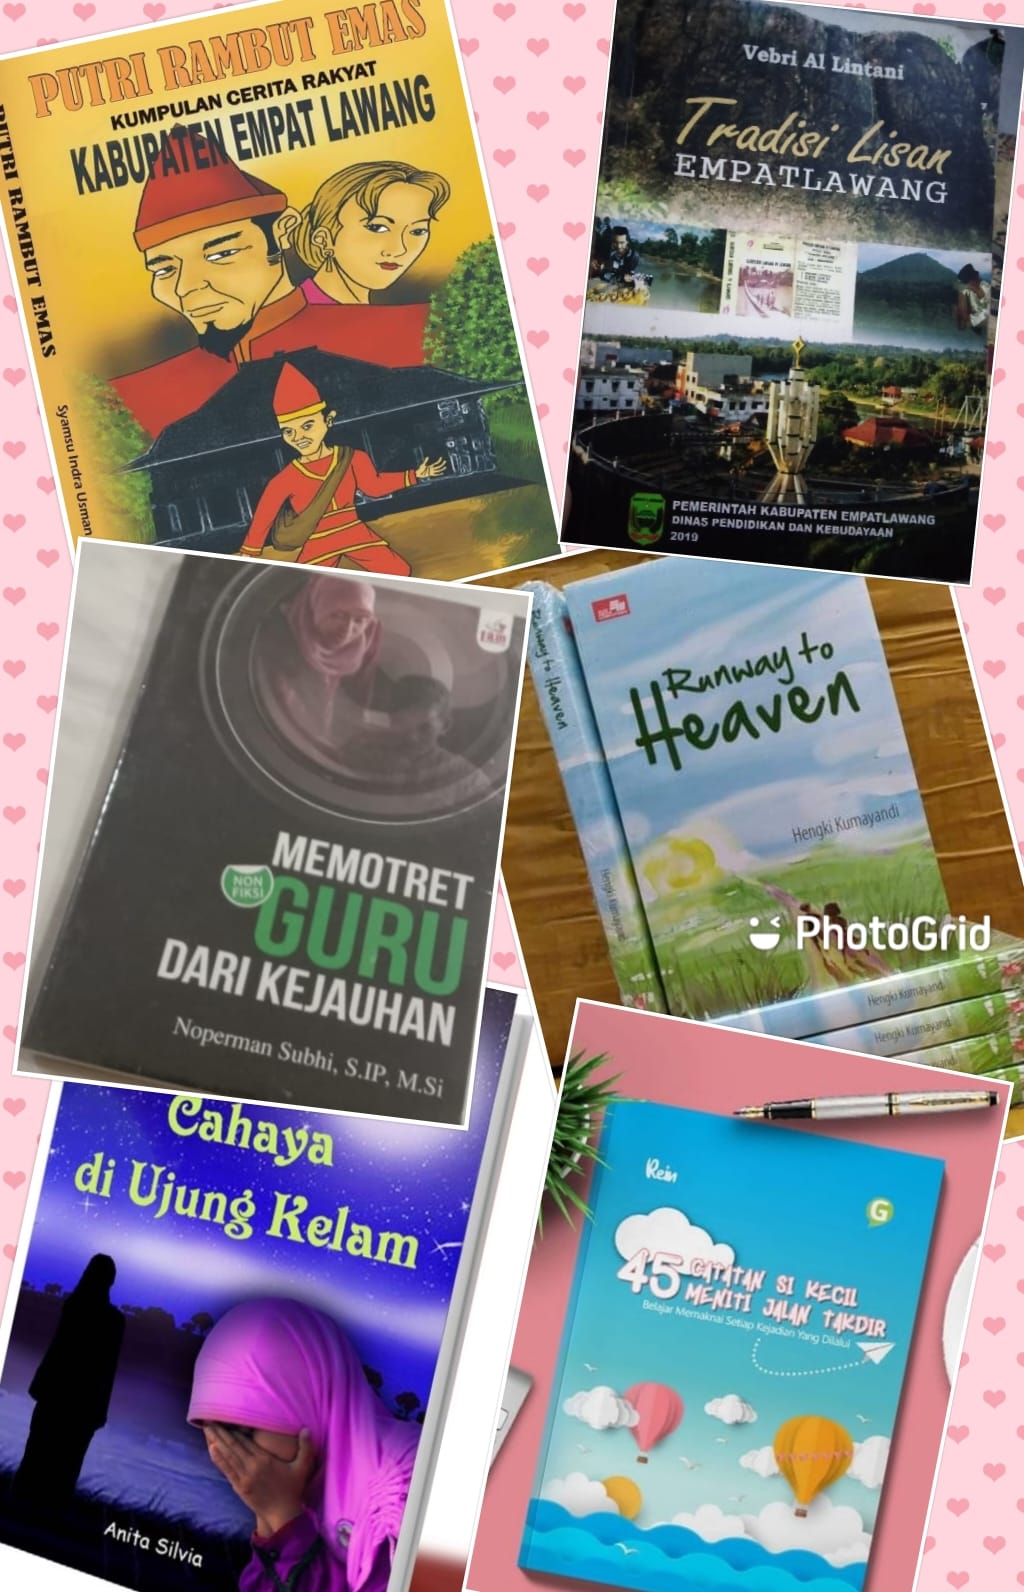 6 Daftar Penulis dari Empat Lawang, 3 Diantaranya Stay di Kampung Halaman